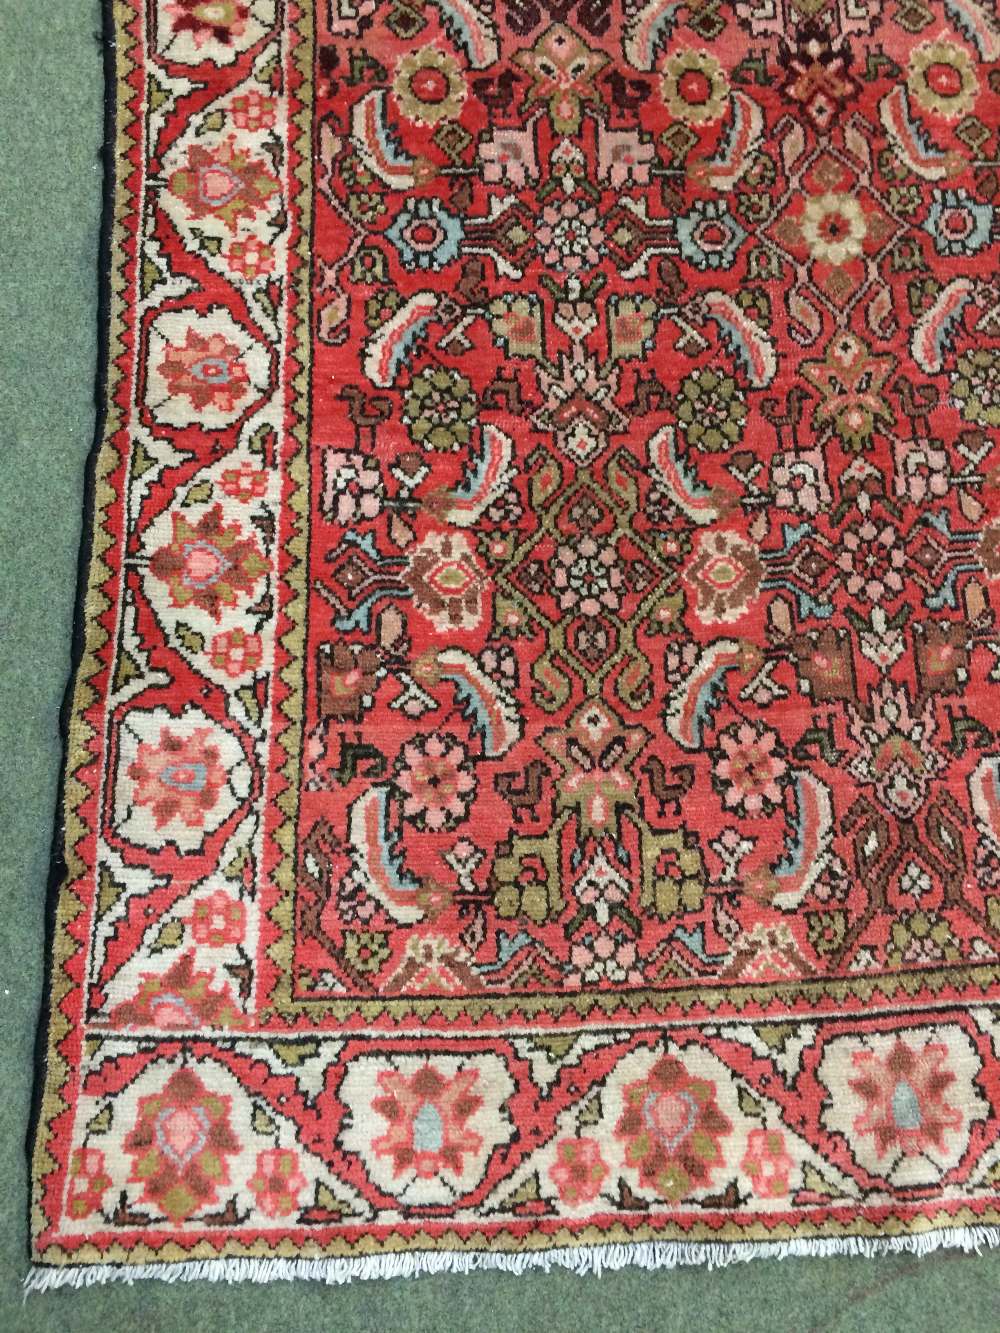 Antique Malayer Persian rug circa 1900s 2.7 X 1.26m - Image 3 of 3